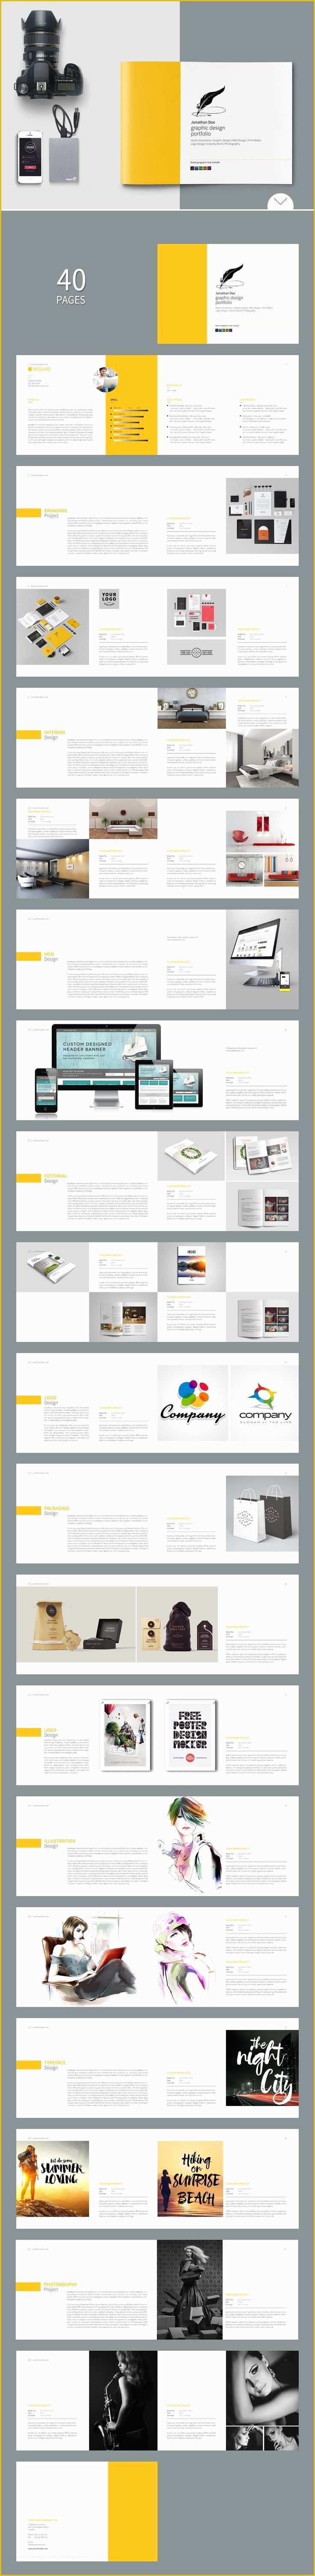 Portfolio Book Template Free Of Free Indesign Report Templates Graphic Design Print